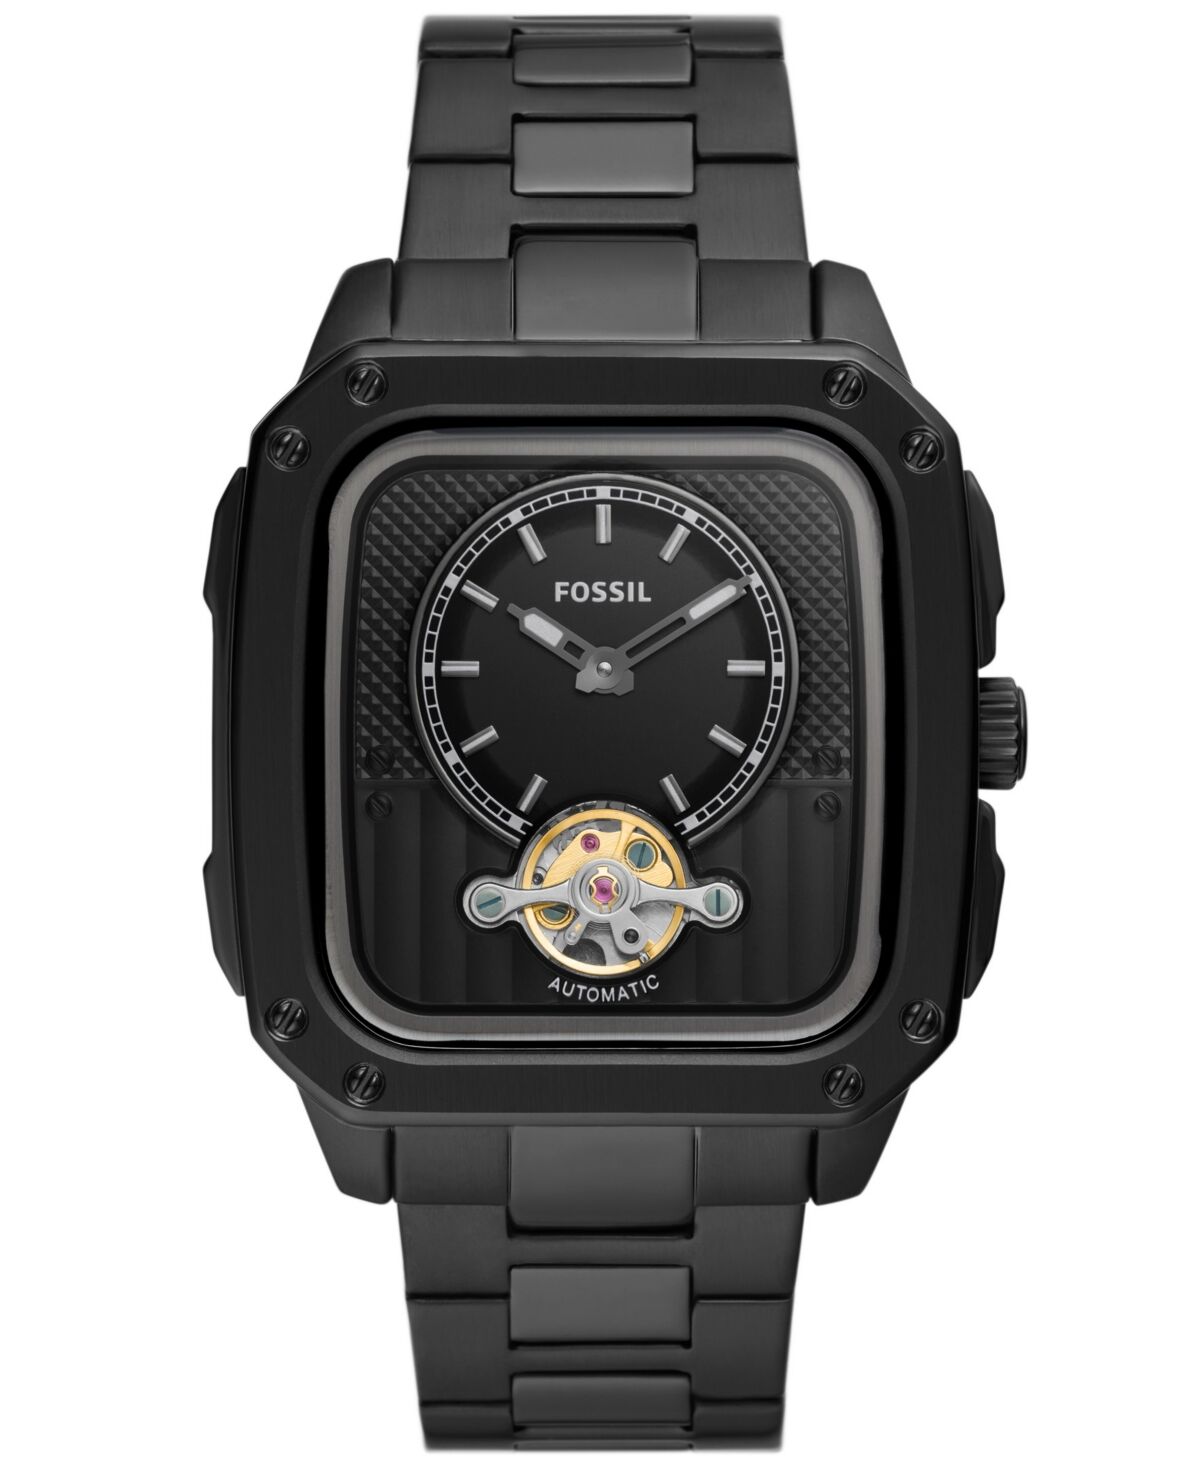 Fossil Men's Inscription Automatic Black Stainless Steel Bracelet Watch, 42mm - Black